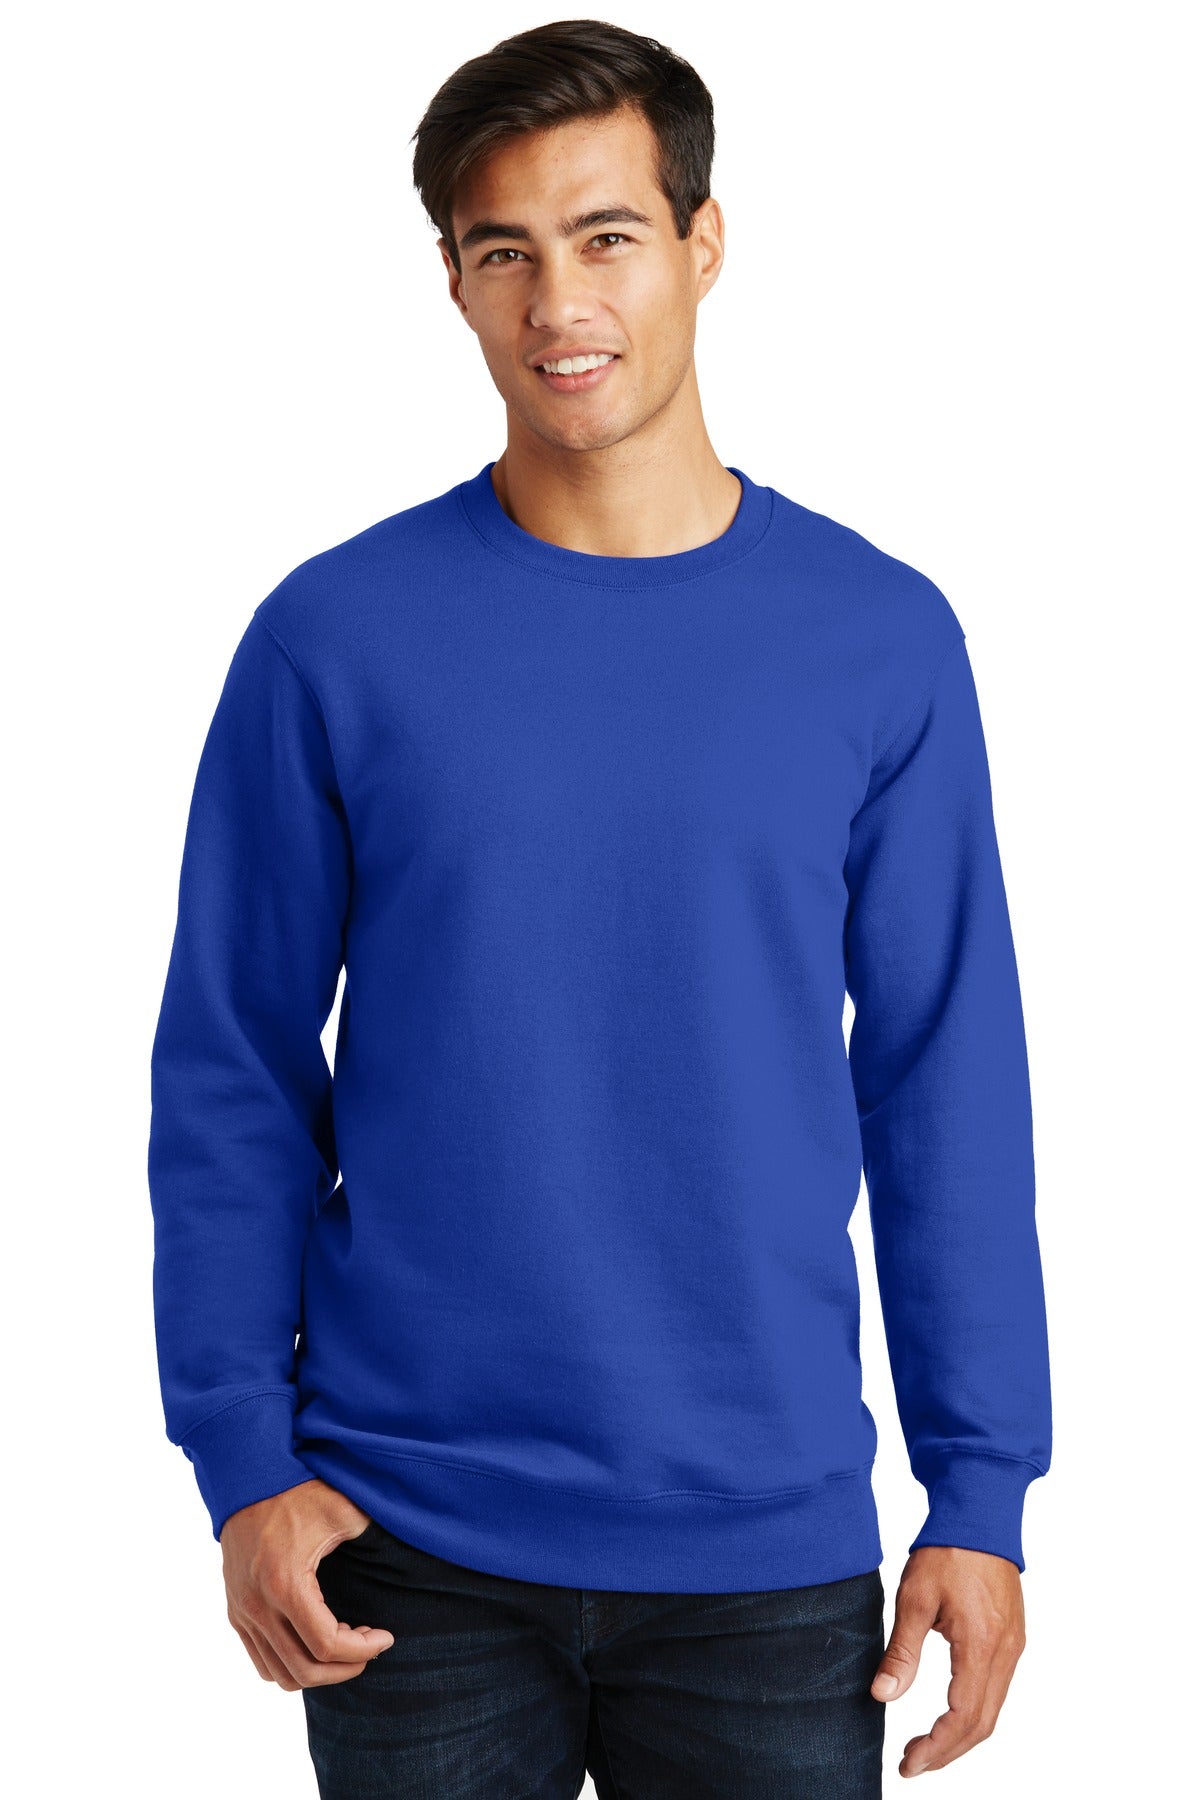 Port & Company® Fan Favorite Fleece Crewneck Sweatshirt. PC850 [True Royal] - DFW Impression